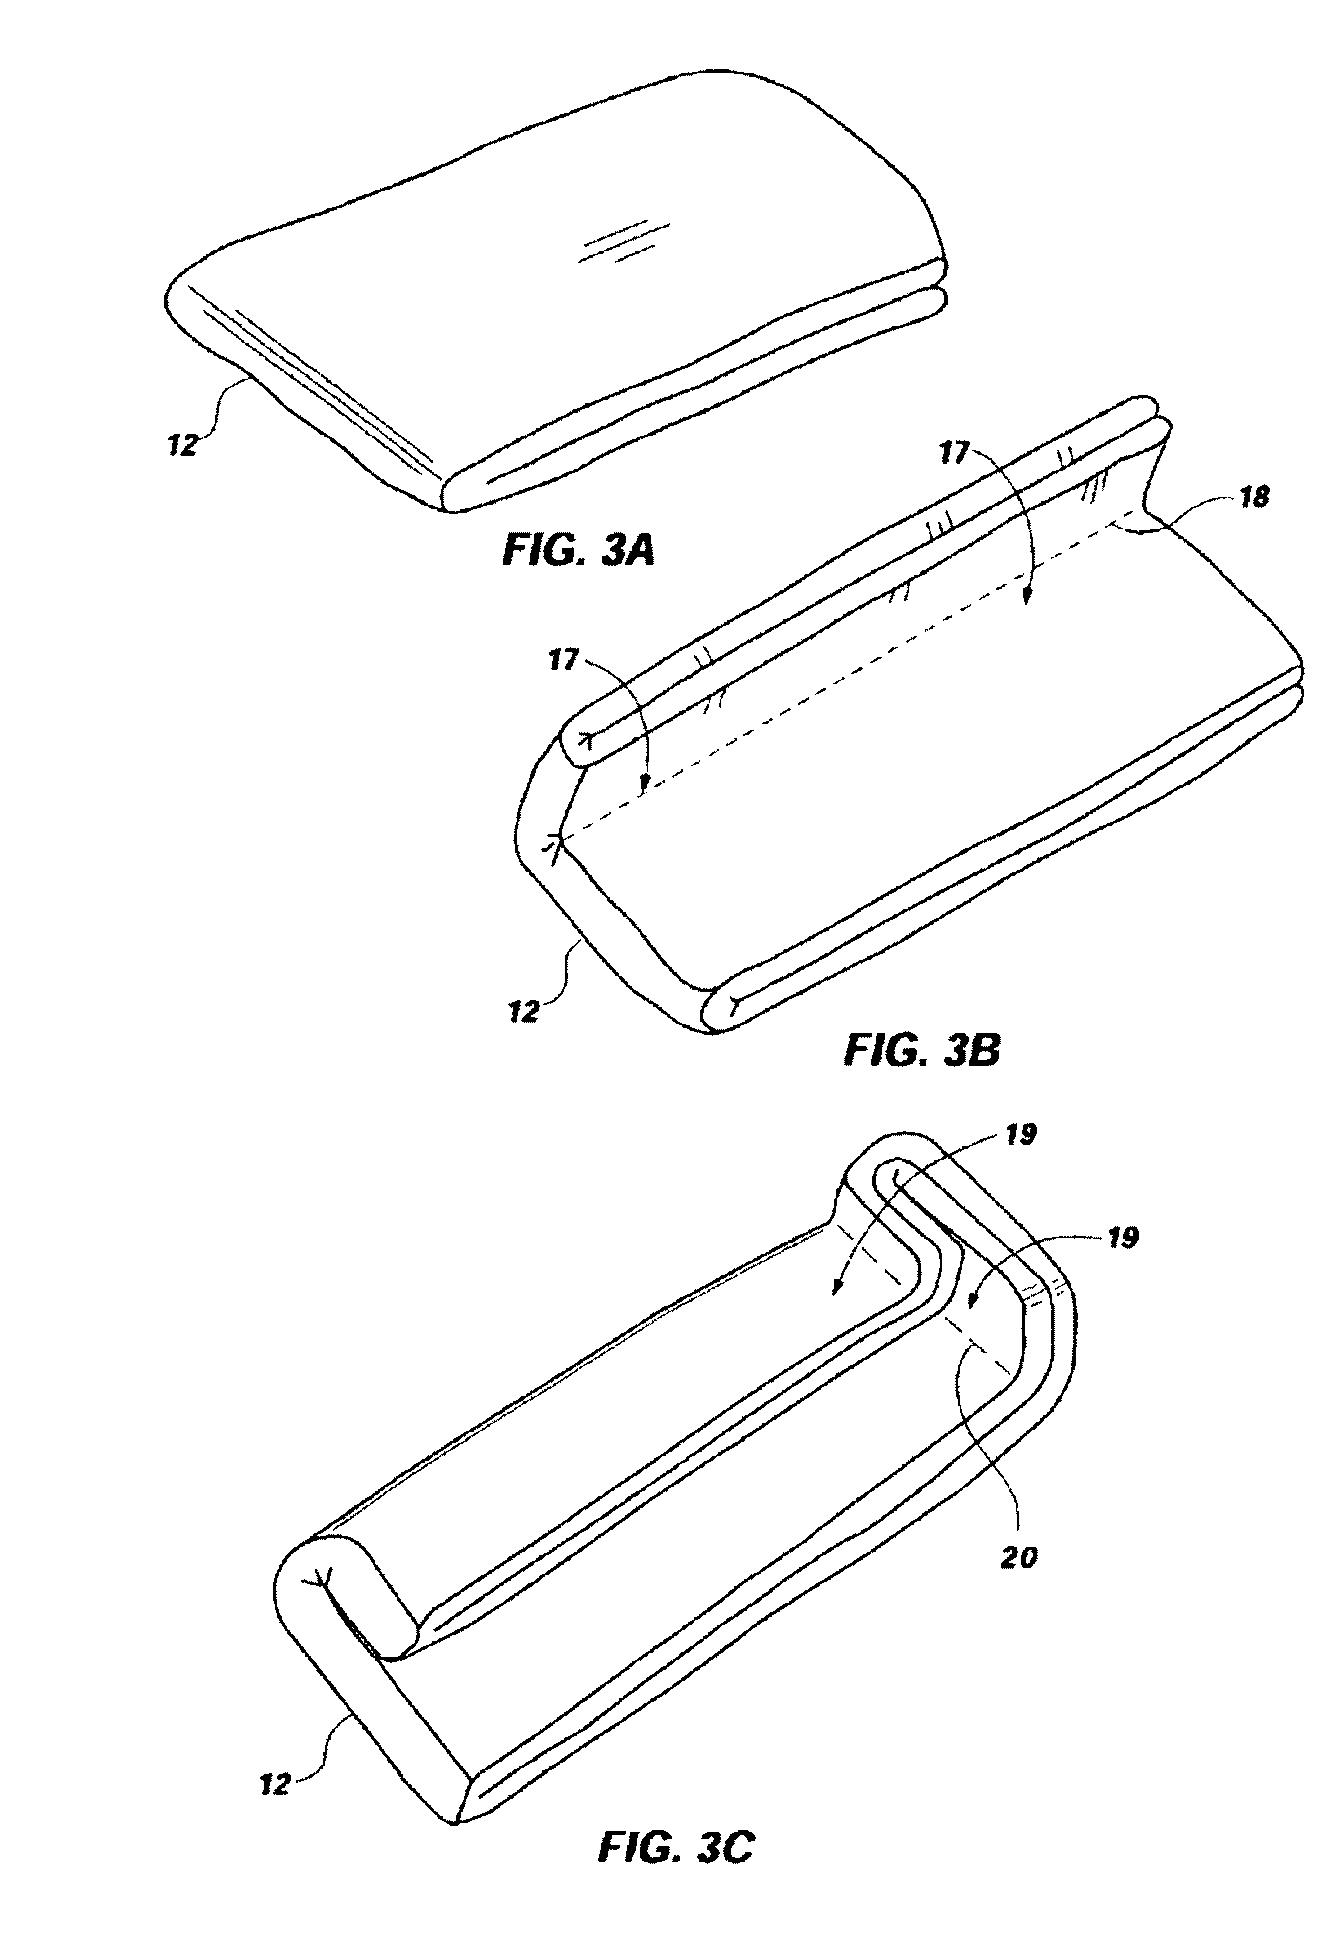 Indicia of folded diaper viewable through encasement